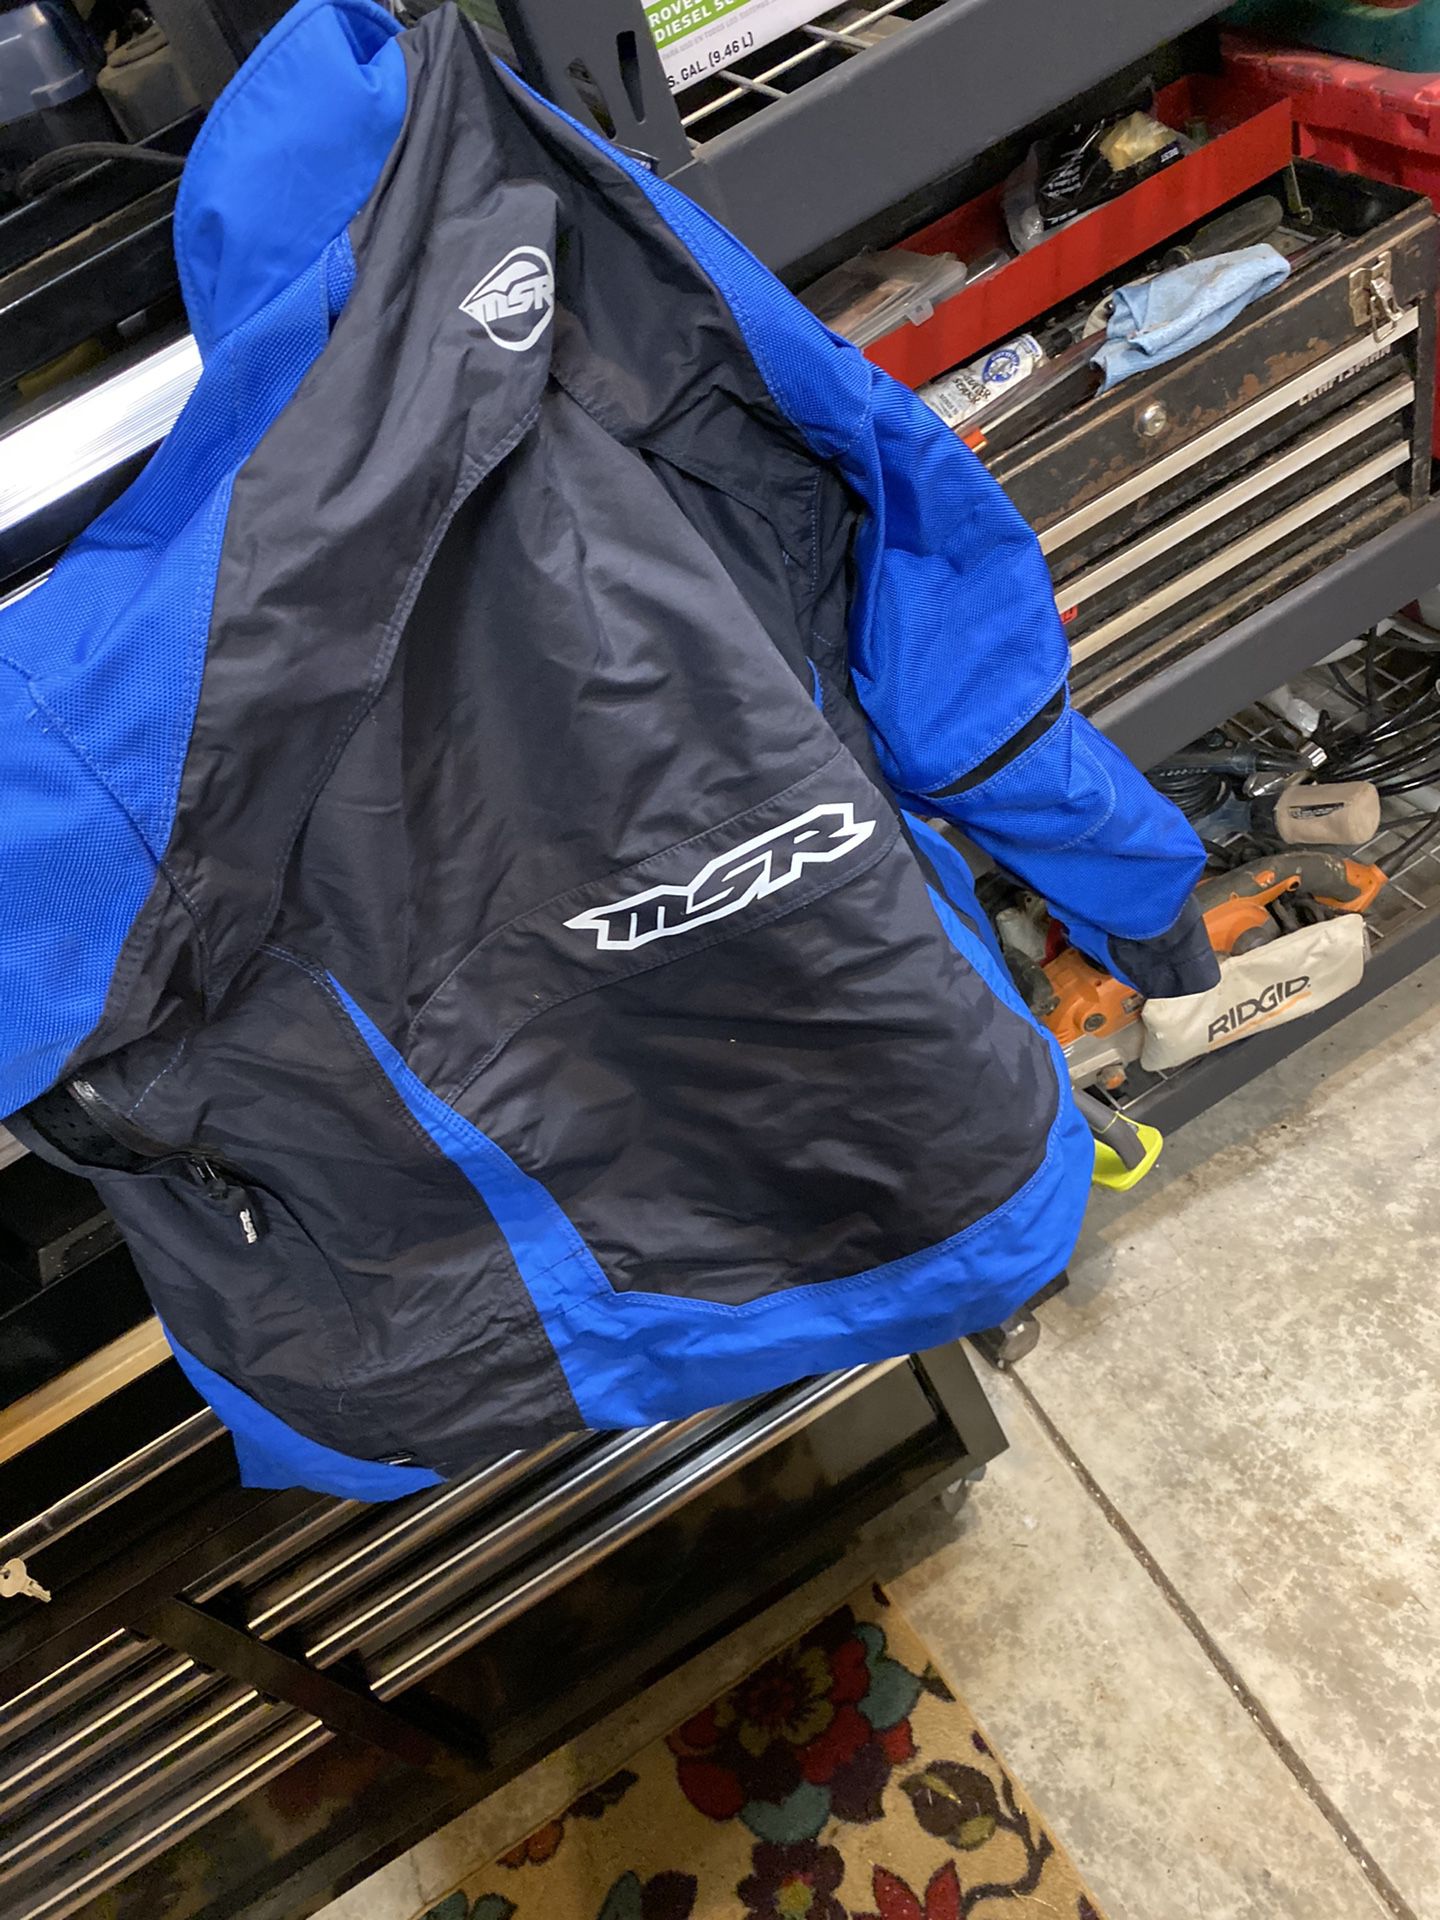 Msr motorcycle jacket